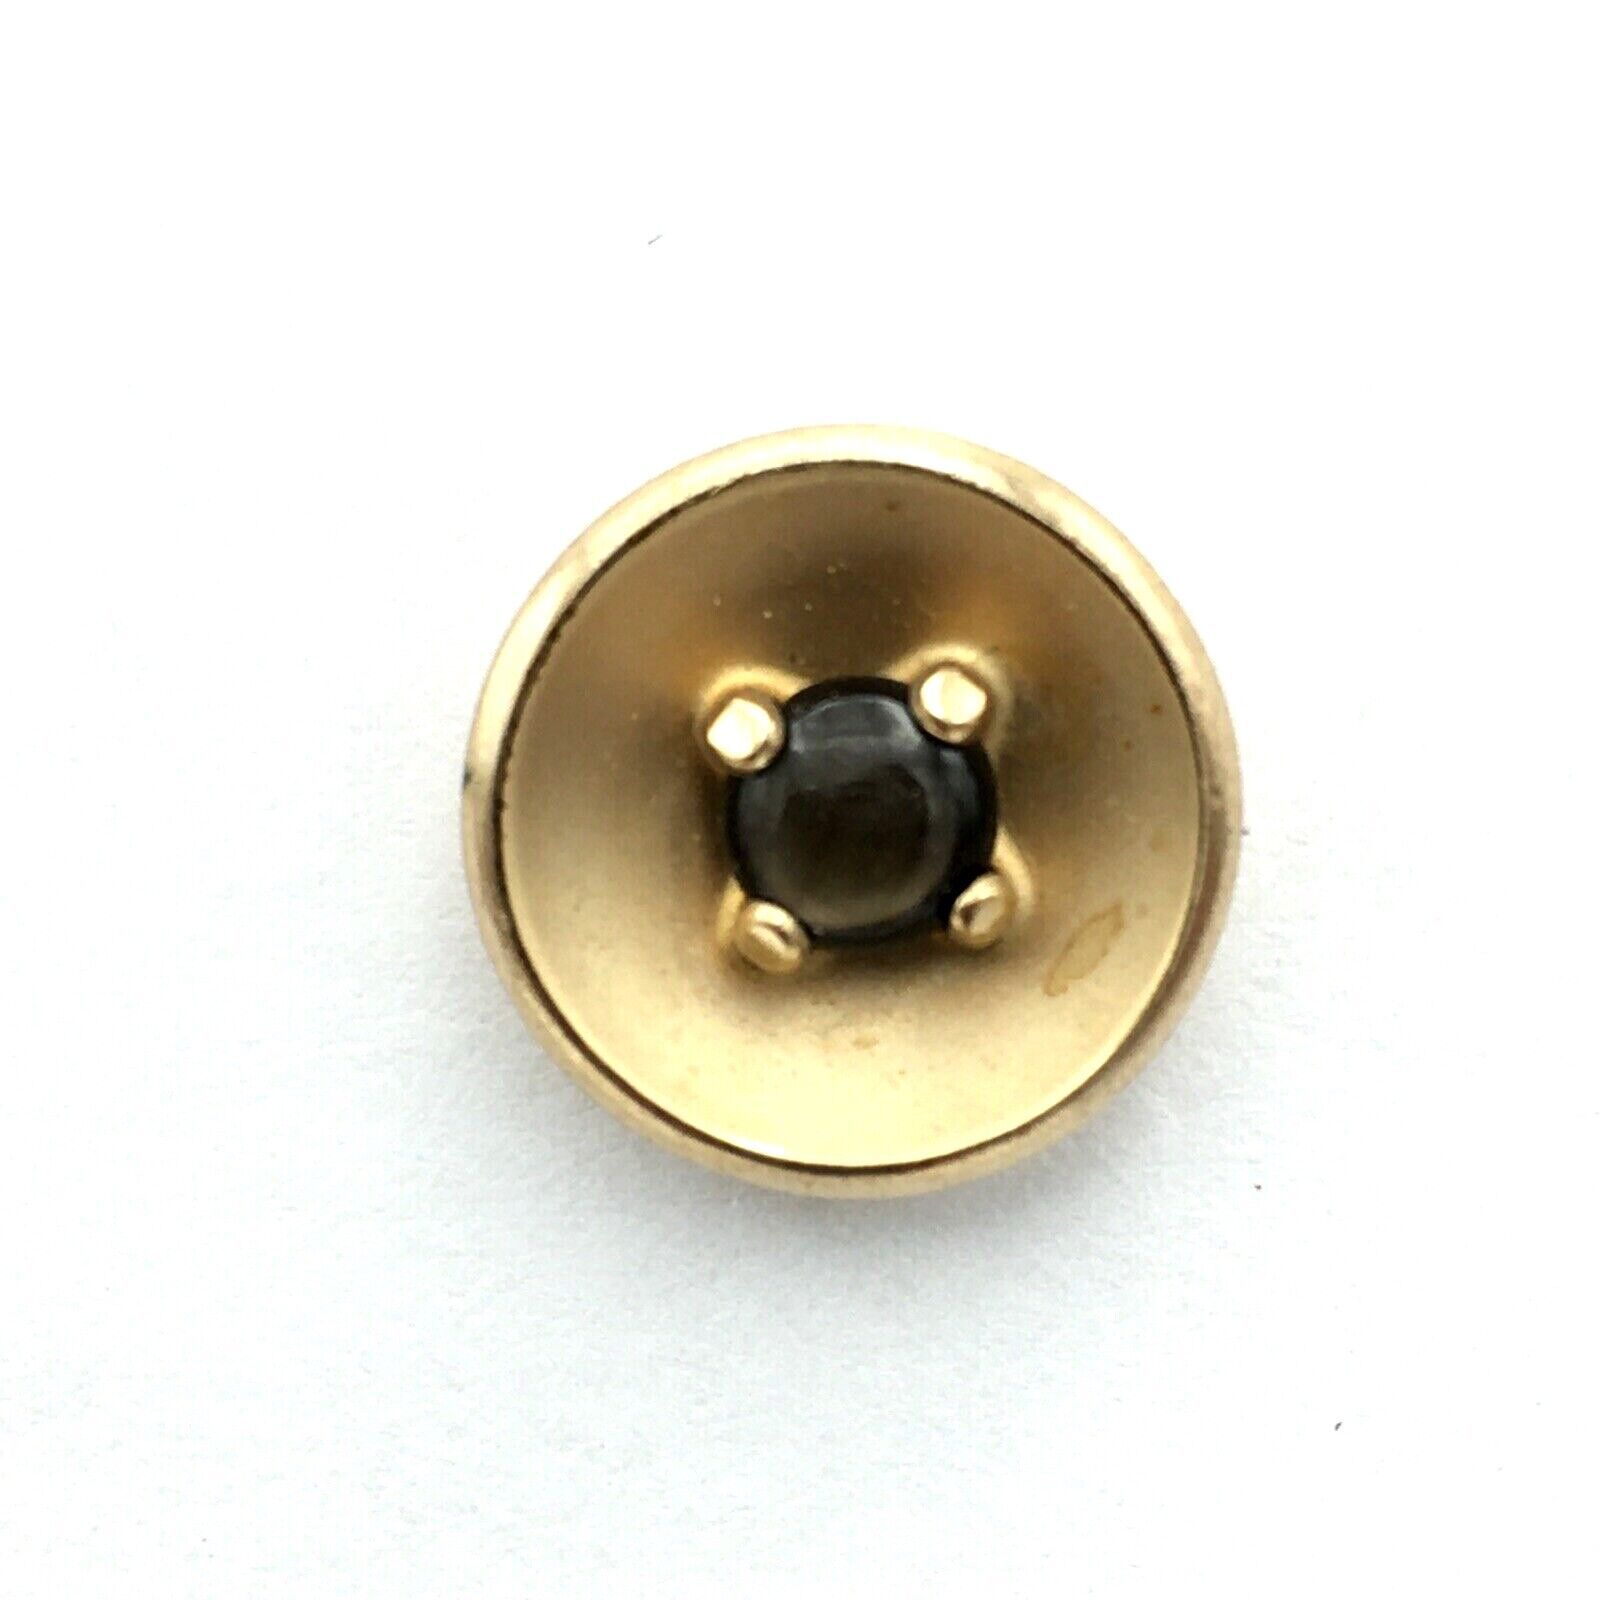 Primary image for BA BALLOU gemstone 12K GF tie tack - yellow gold fill topaz stone round 1/2"